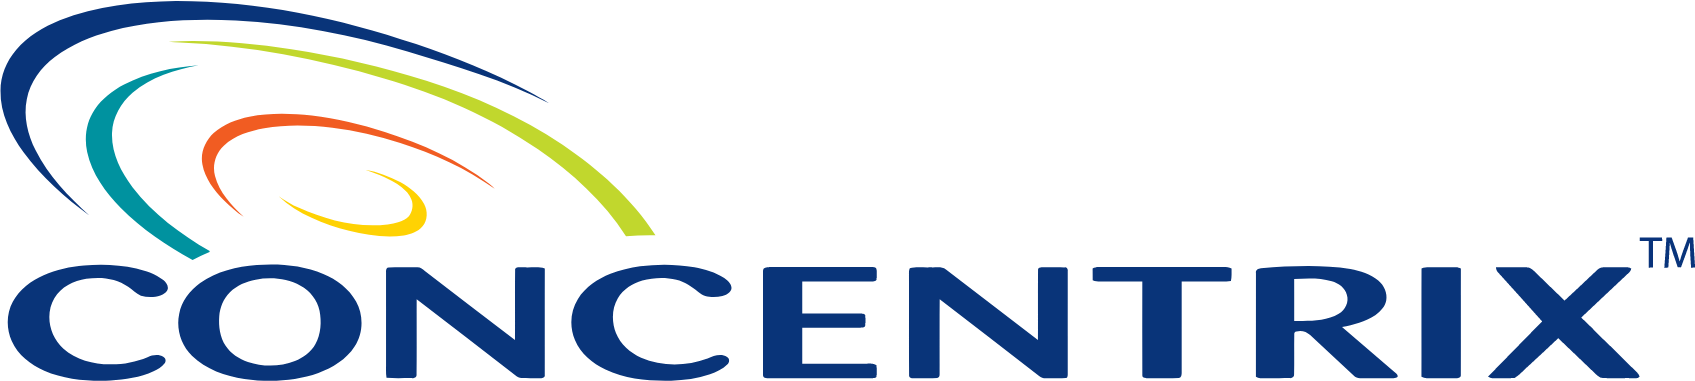 Concentrix logo large (transparent PNG)